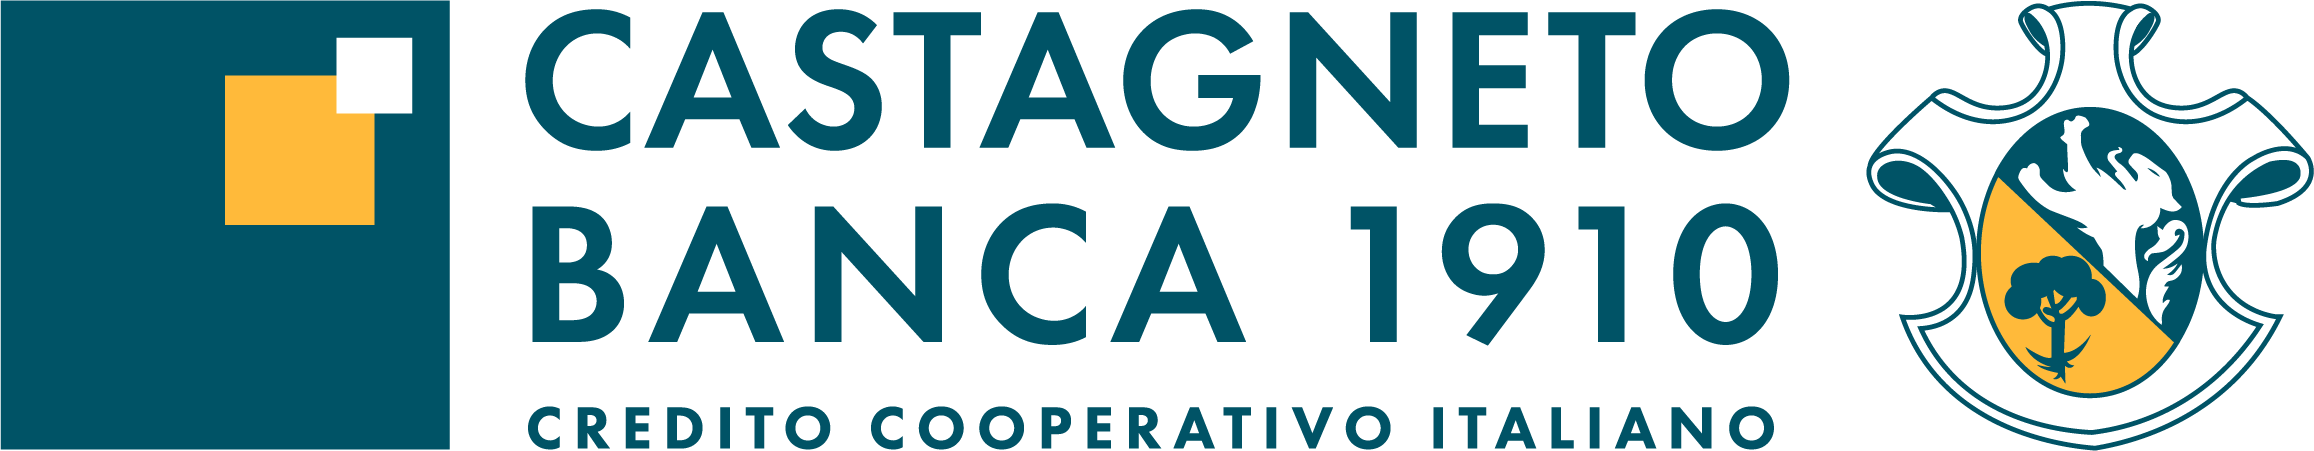 Logo Castagneto Banca